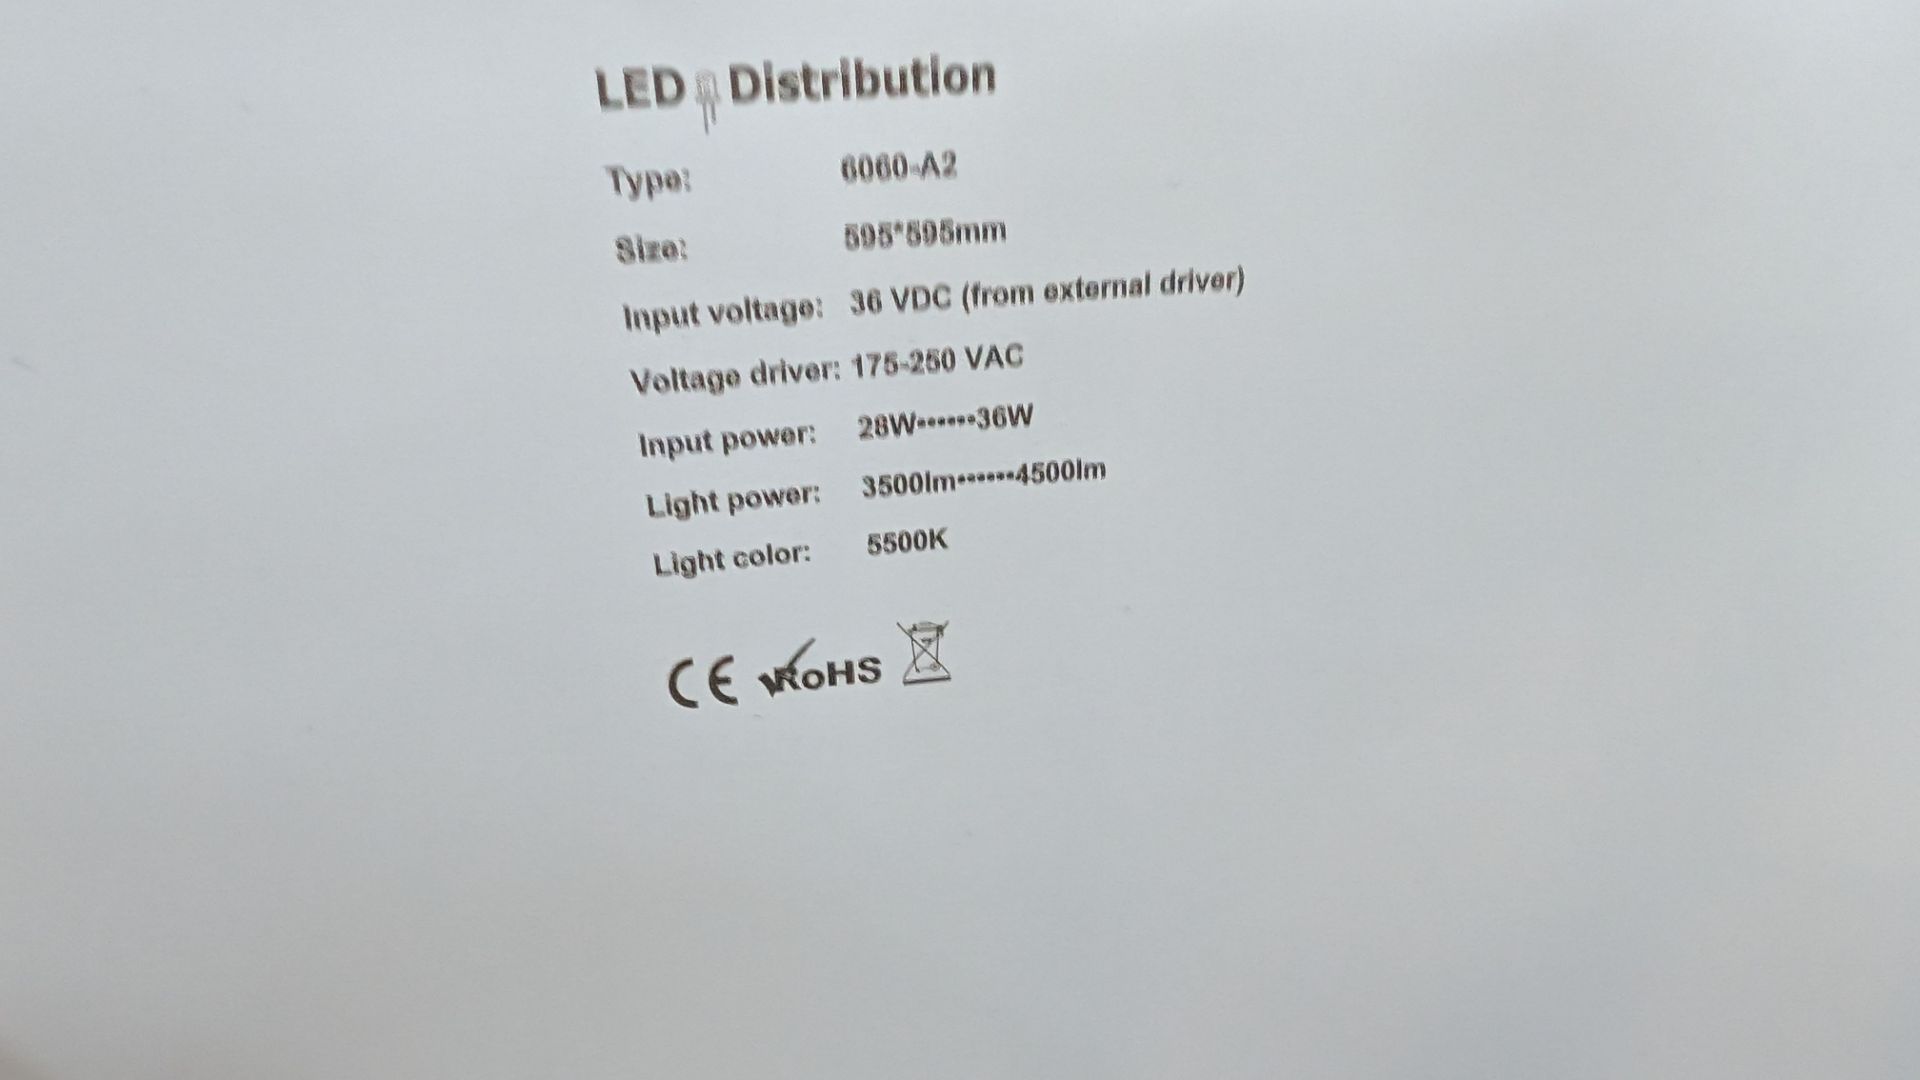 20 off Elegance Premium Eco 595mm x 595mm LED lighting panels. 5500k. 28/36w input power. 36w dri - Image 11 of 16